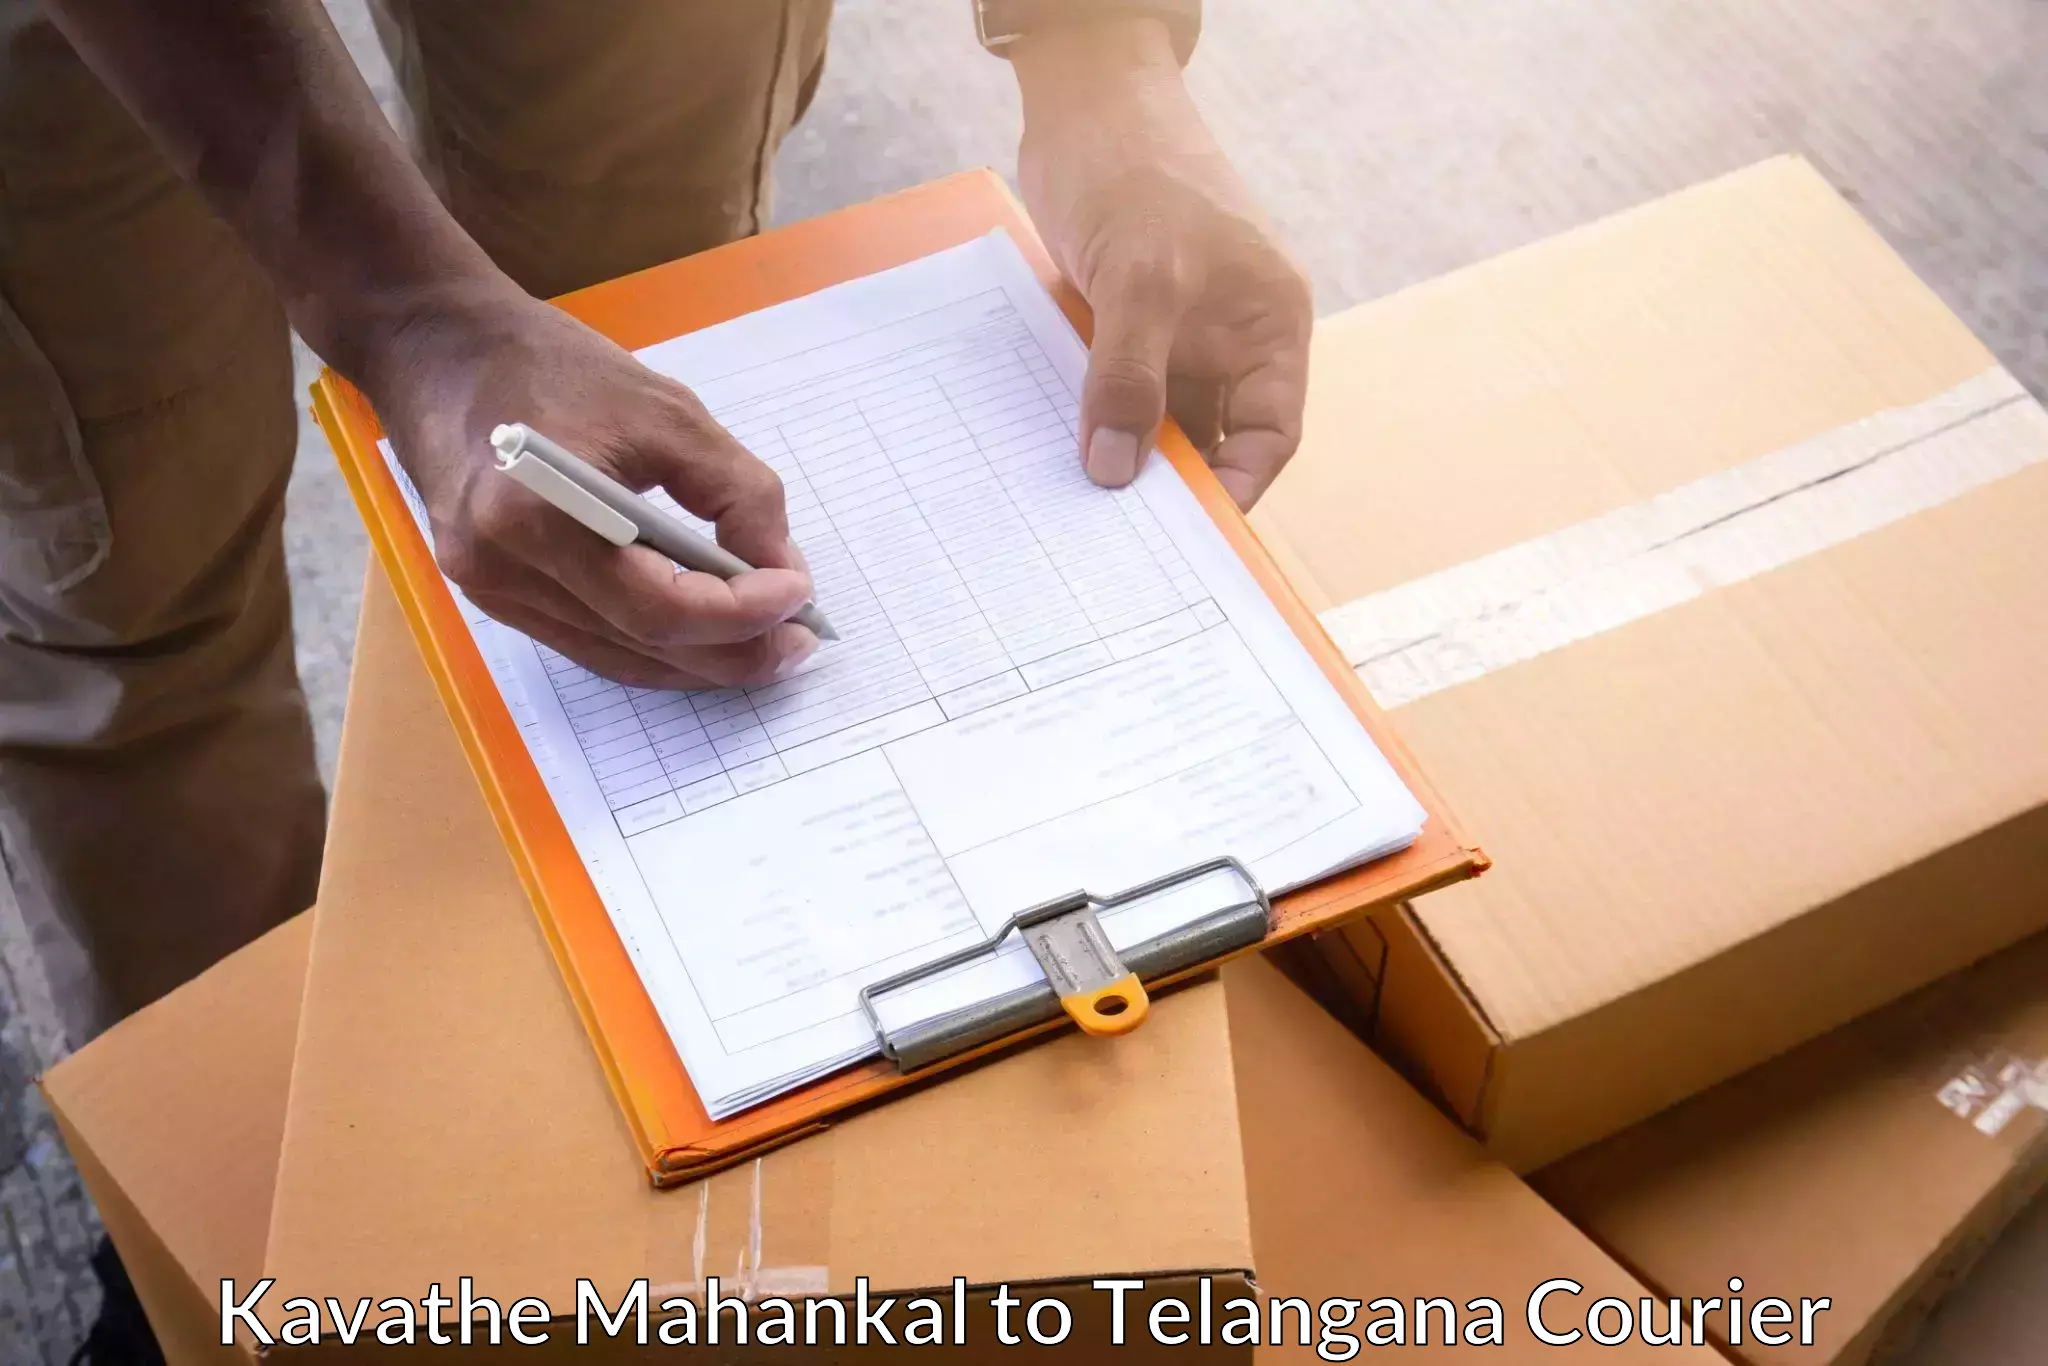 Efficient freight service Kavathe Mahankal to Telangana